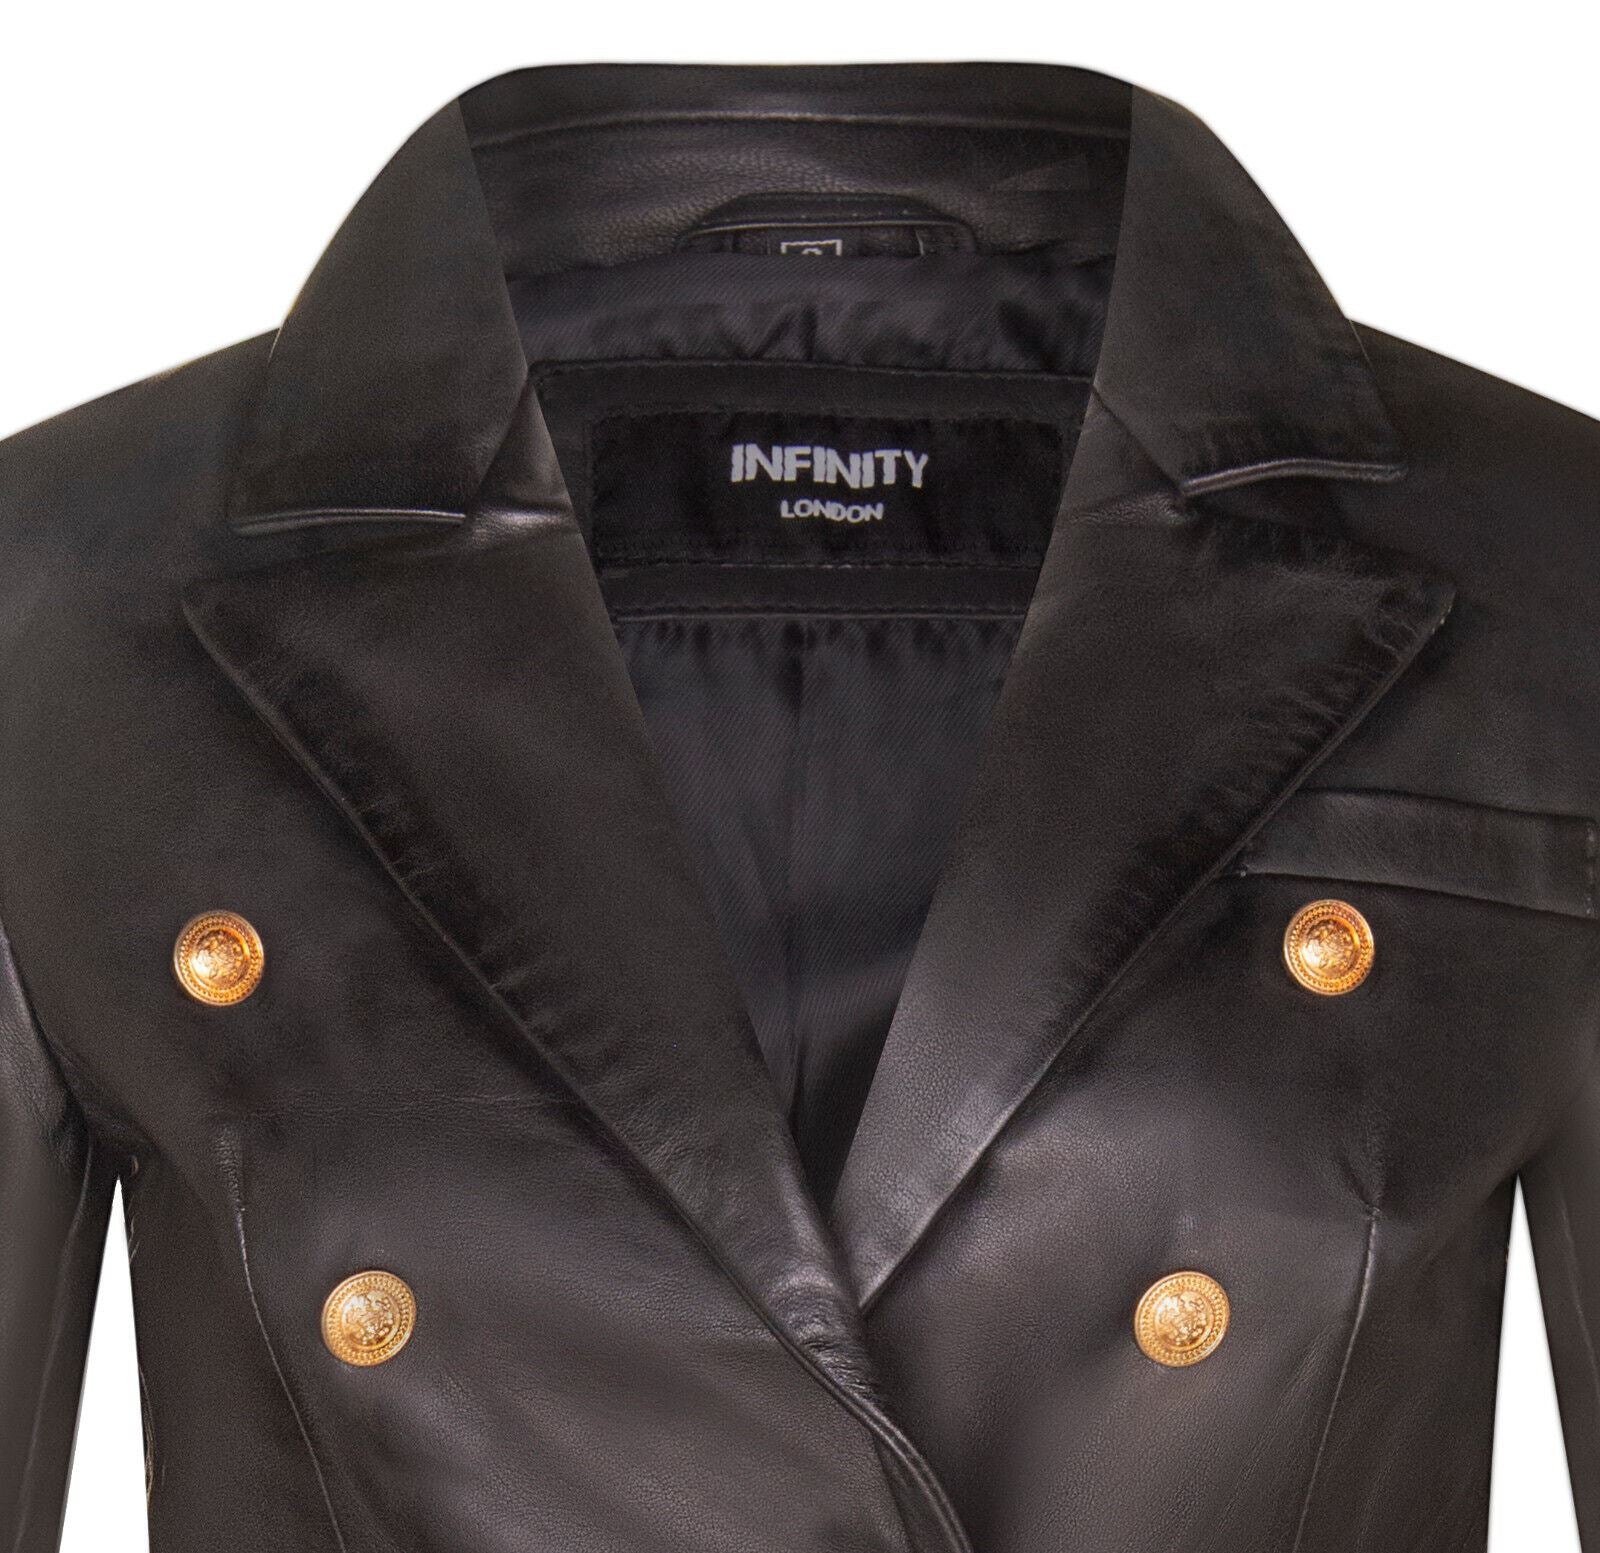 Womens Classic Leather Military Blazer Jacket-Newent